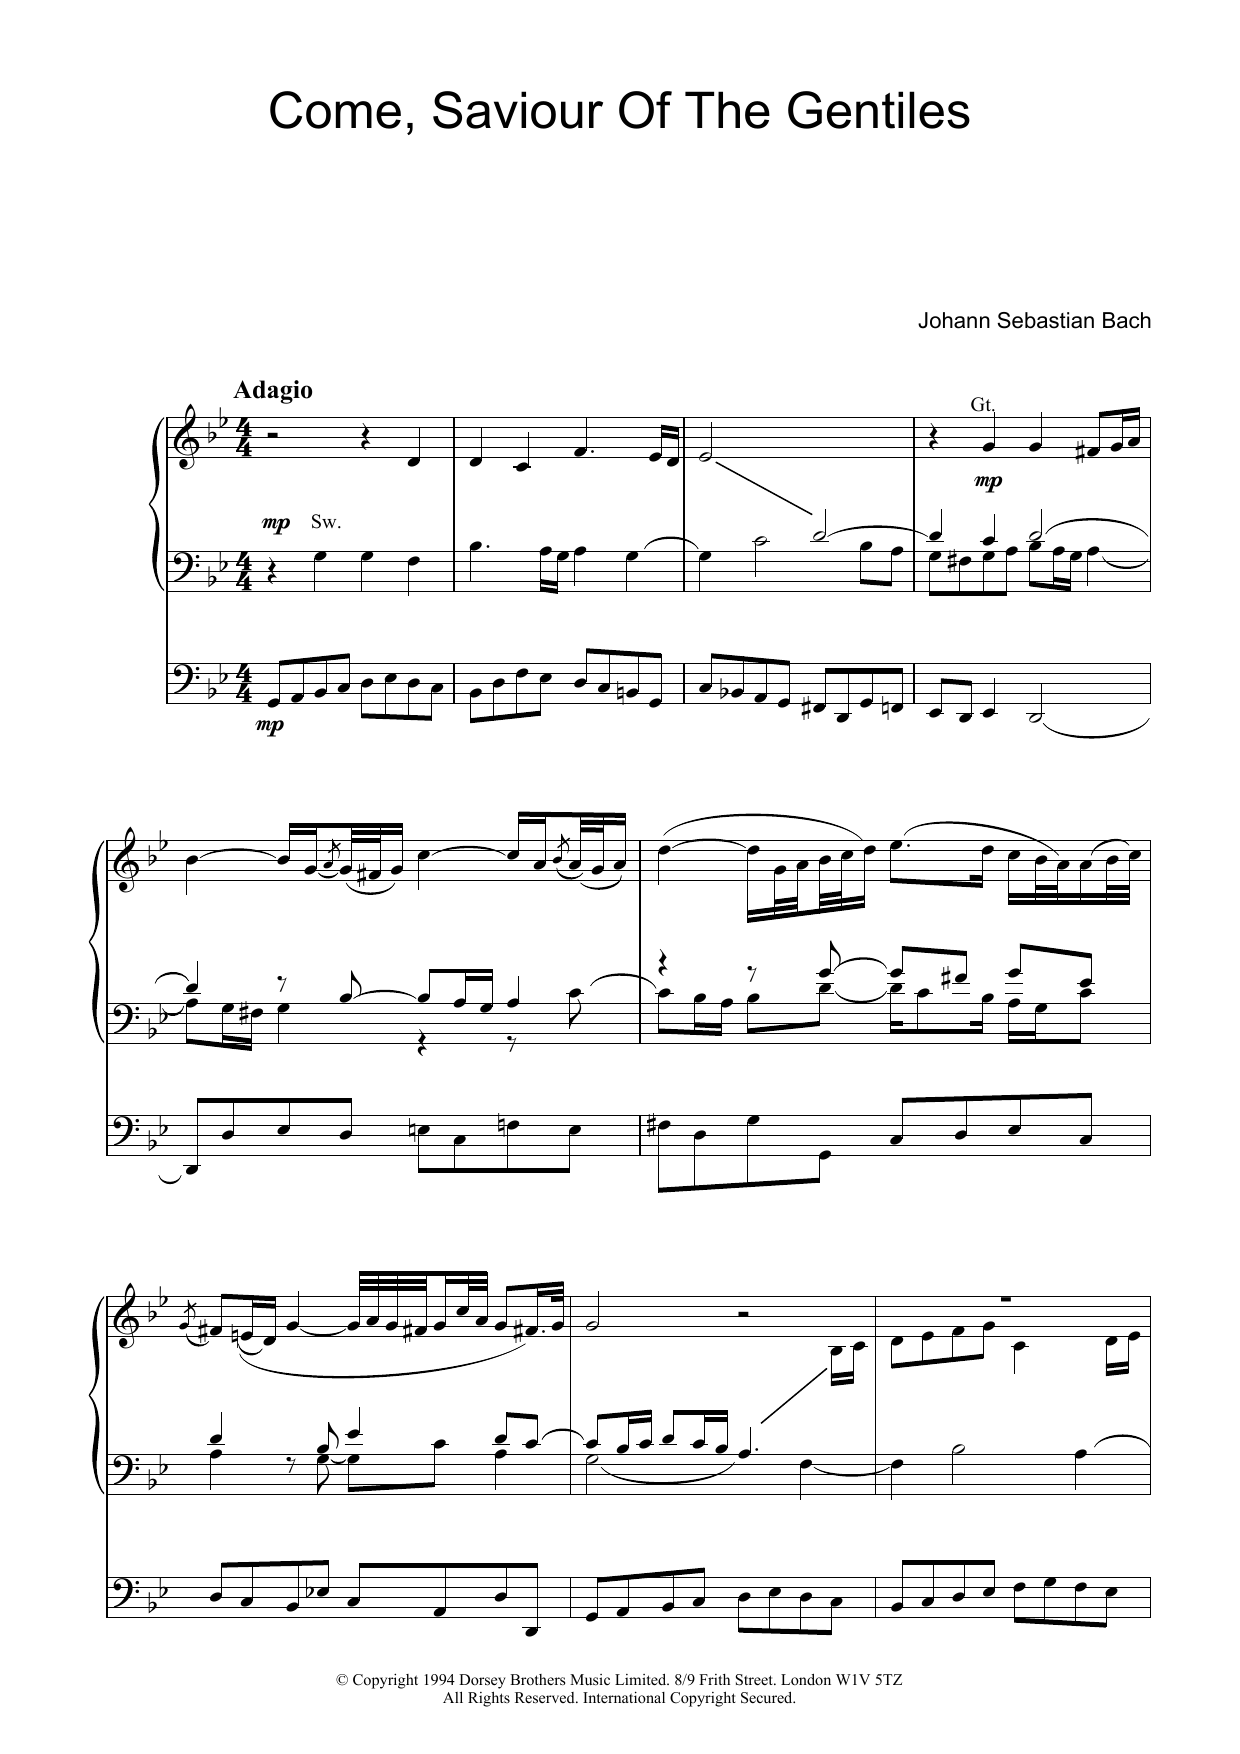 Johann Sebastian Bach Come, Saviour Of The Gentiles Sheet Music Notes & Chords for Organ - Download or Print PDF